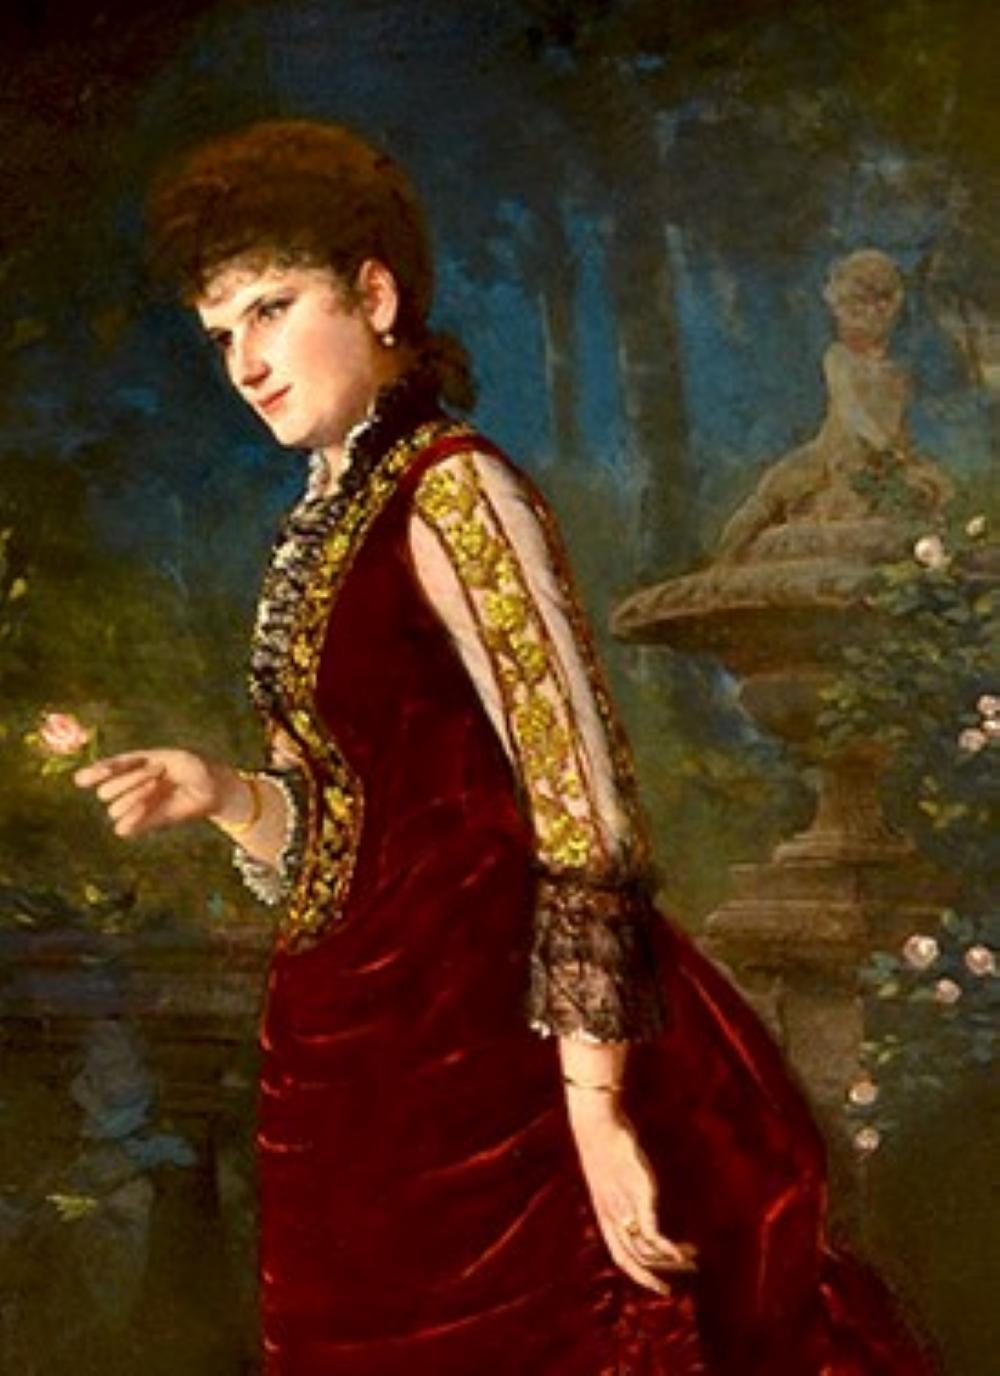  Full length Portrait of Jeannie Netter, wearing a Burgundy dress